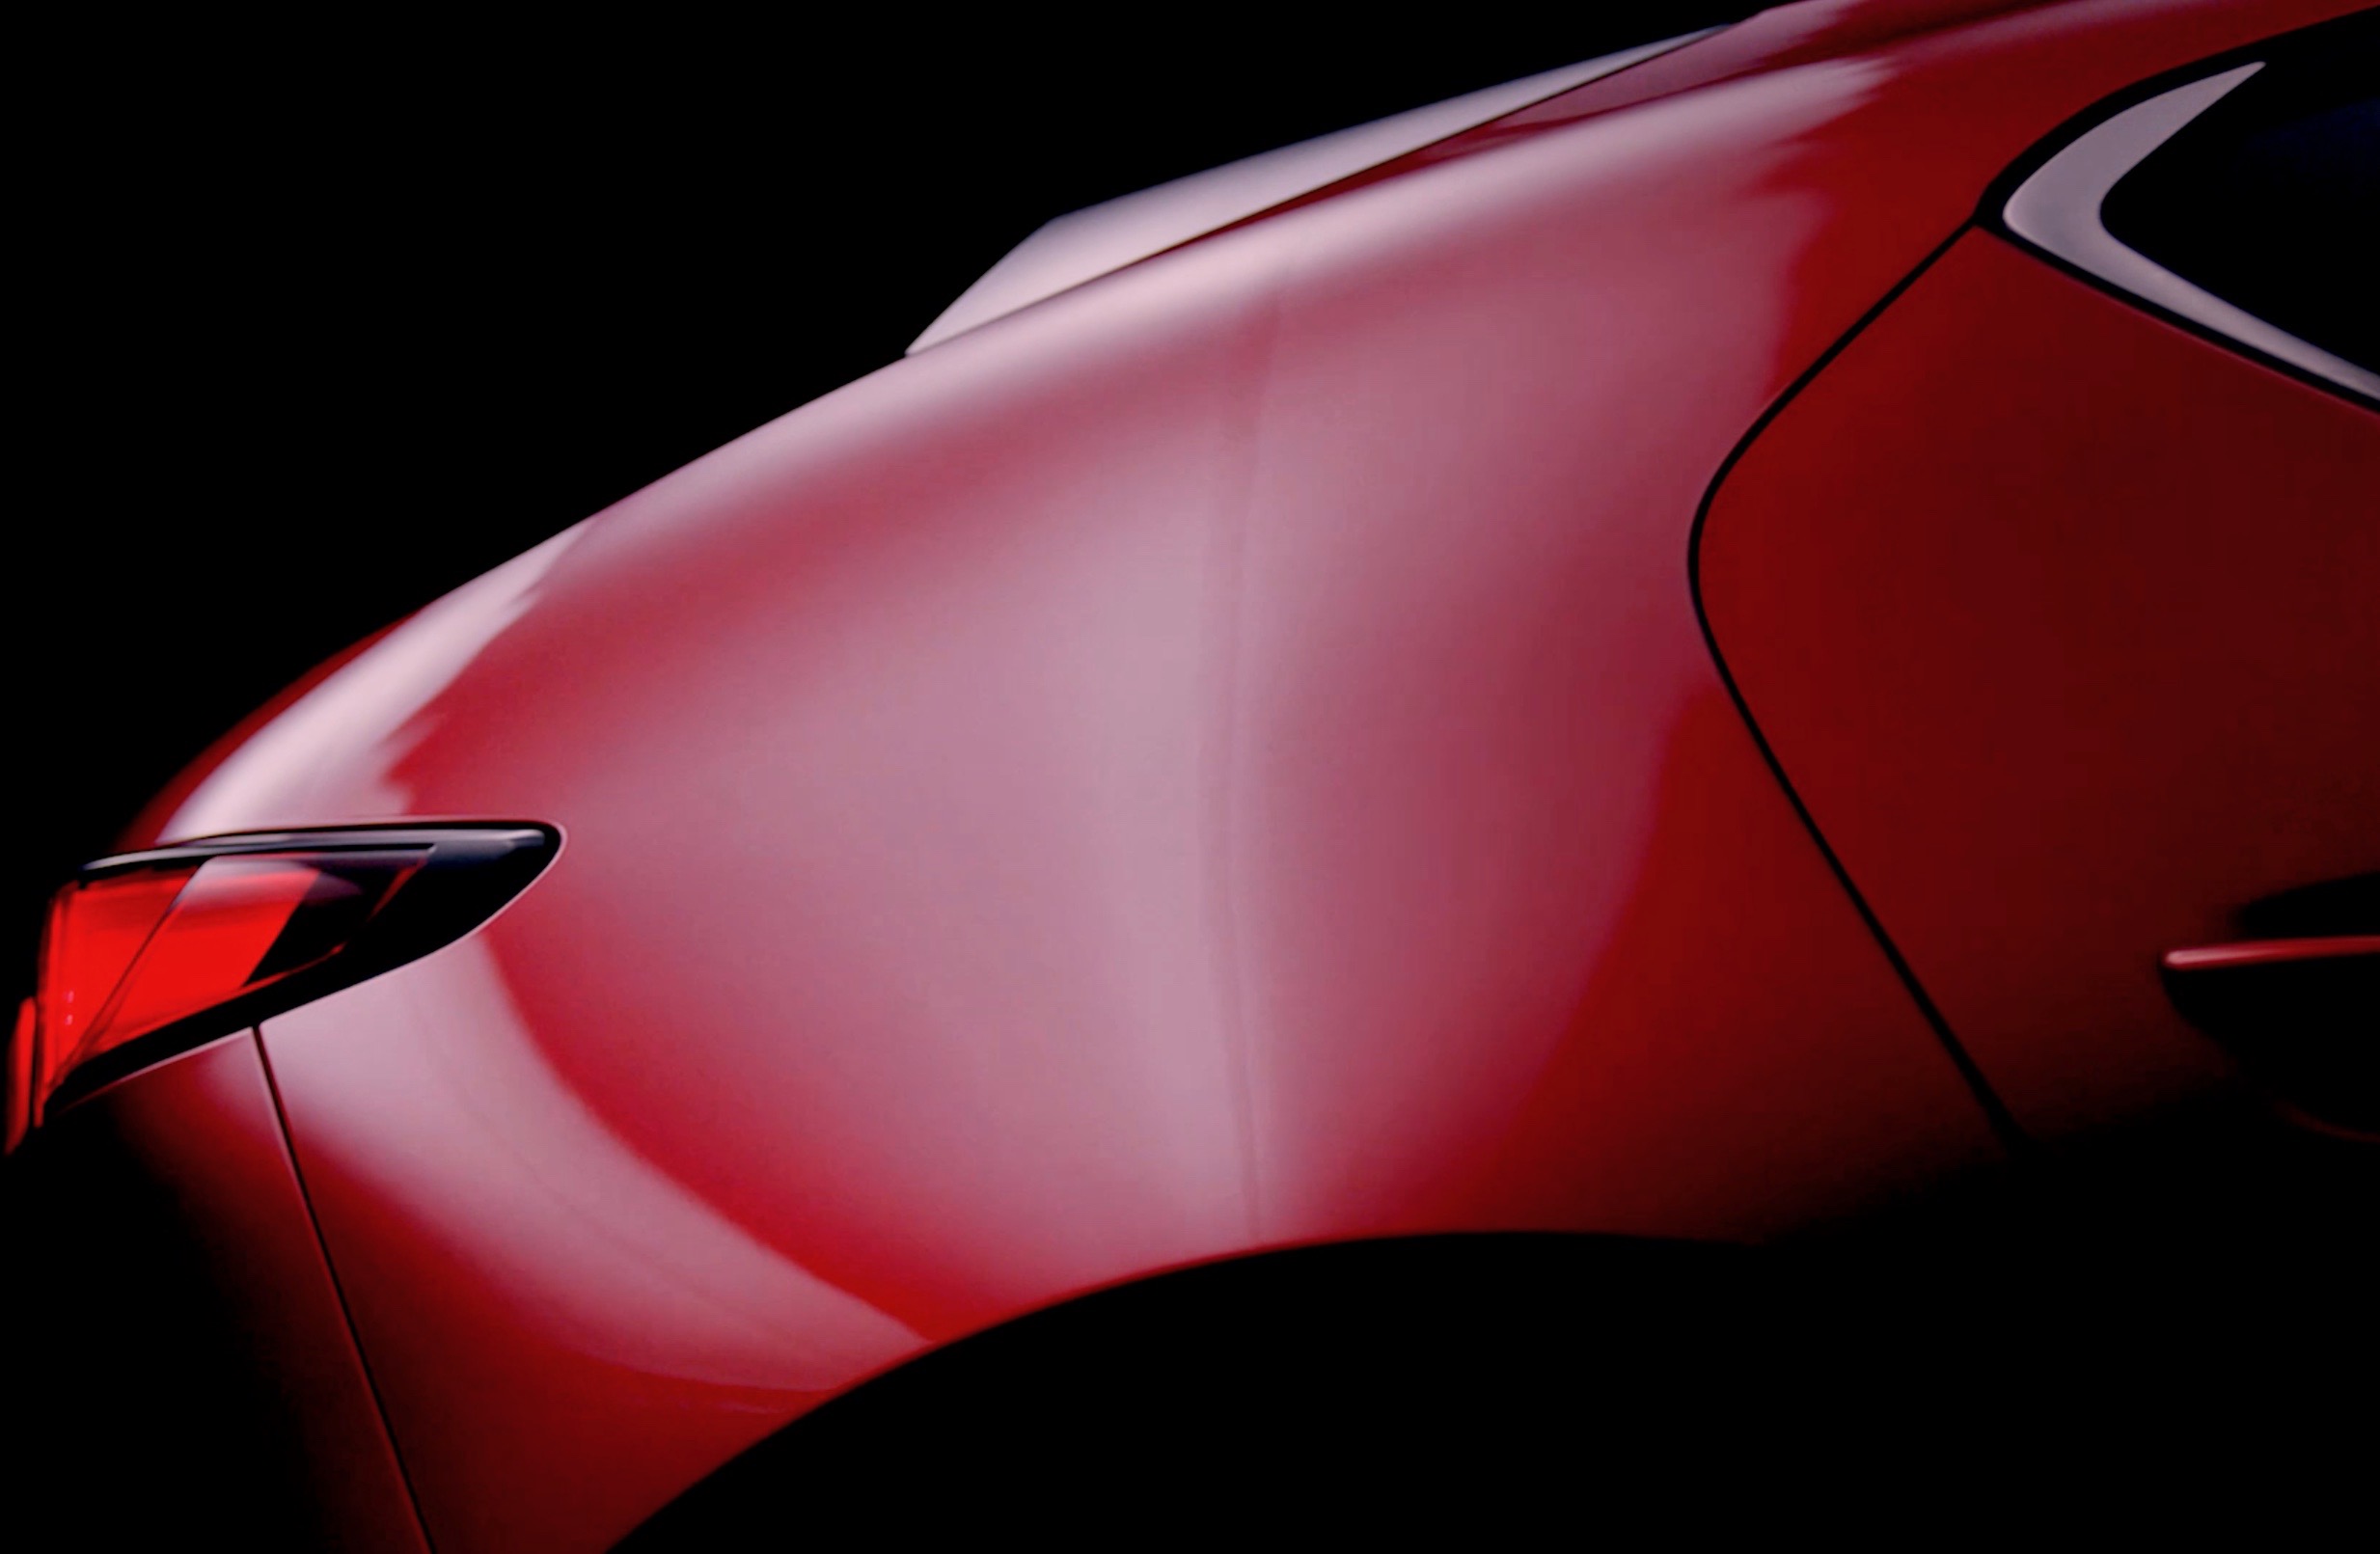 All-new 2019 Mazda3 previewed, debuts in November (video)